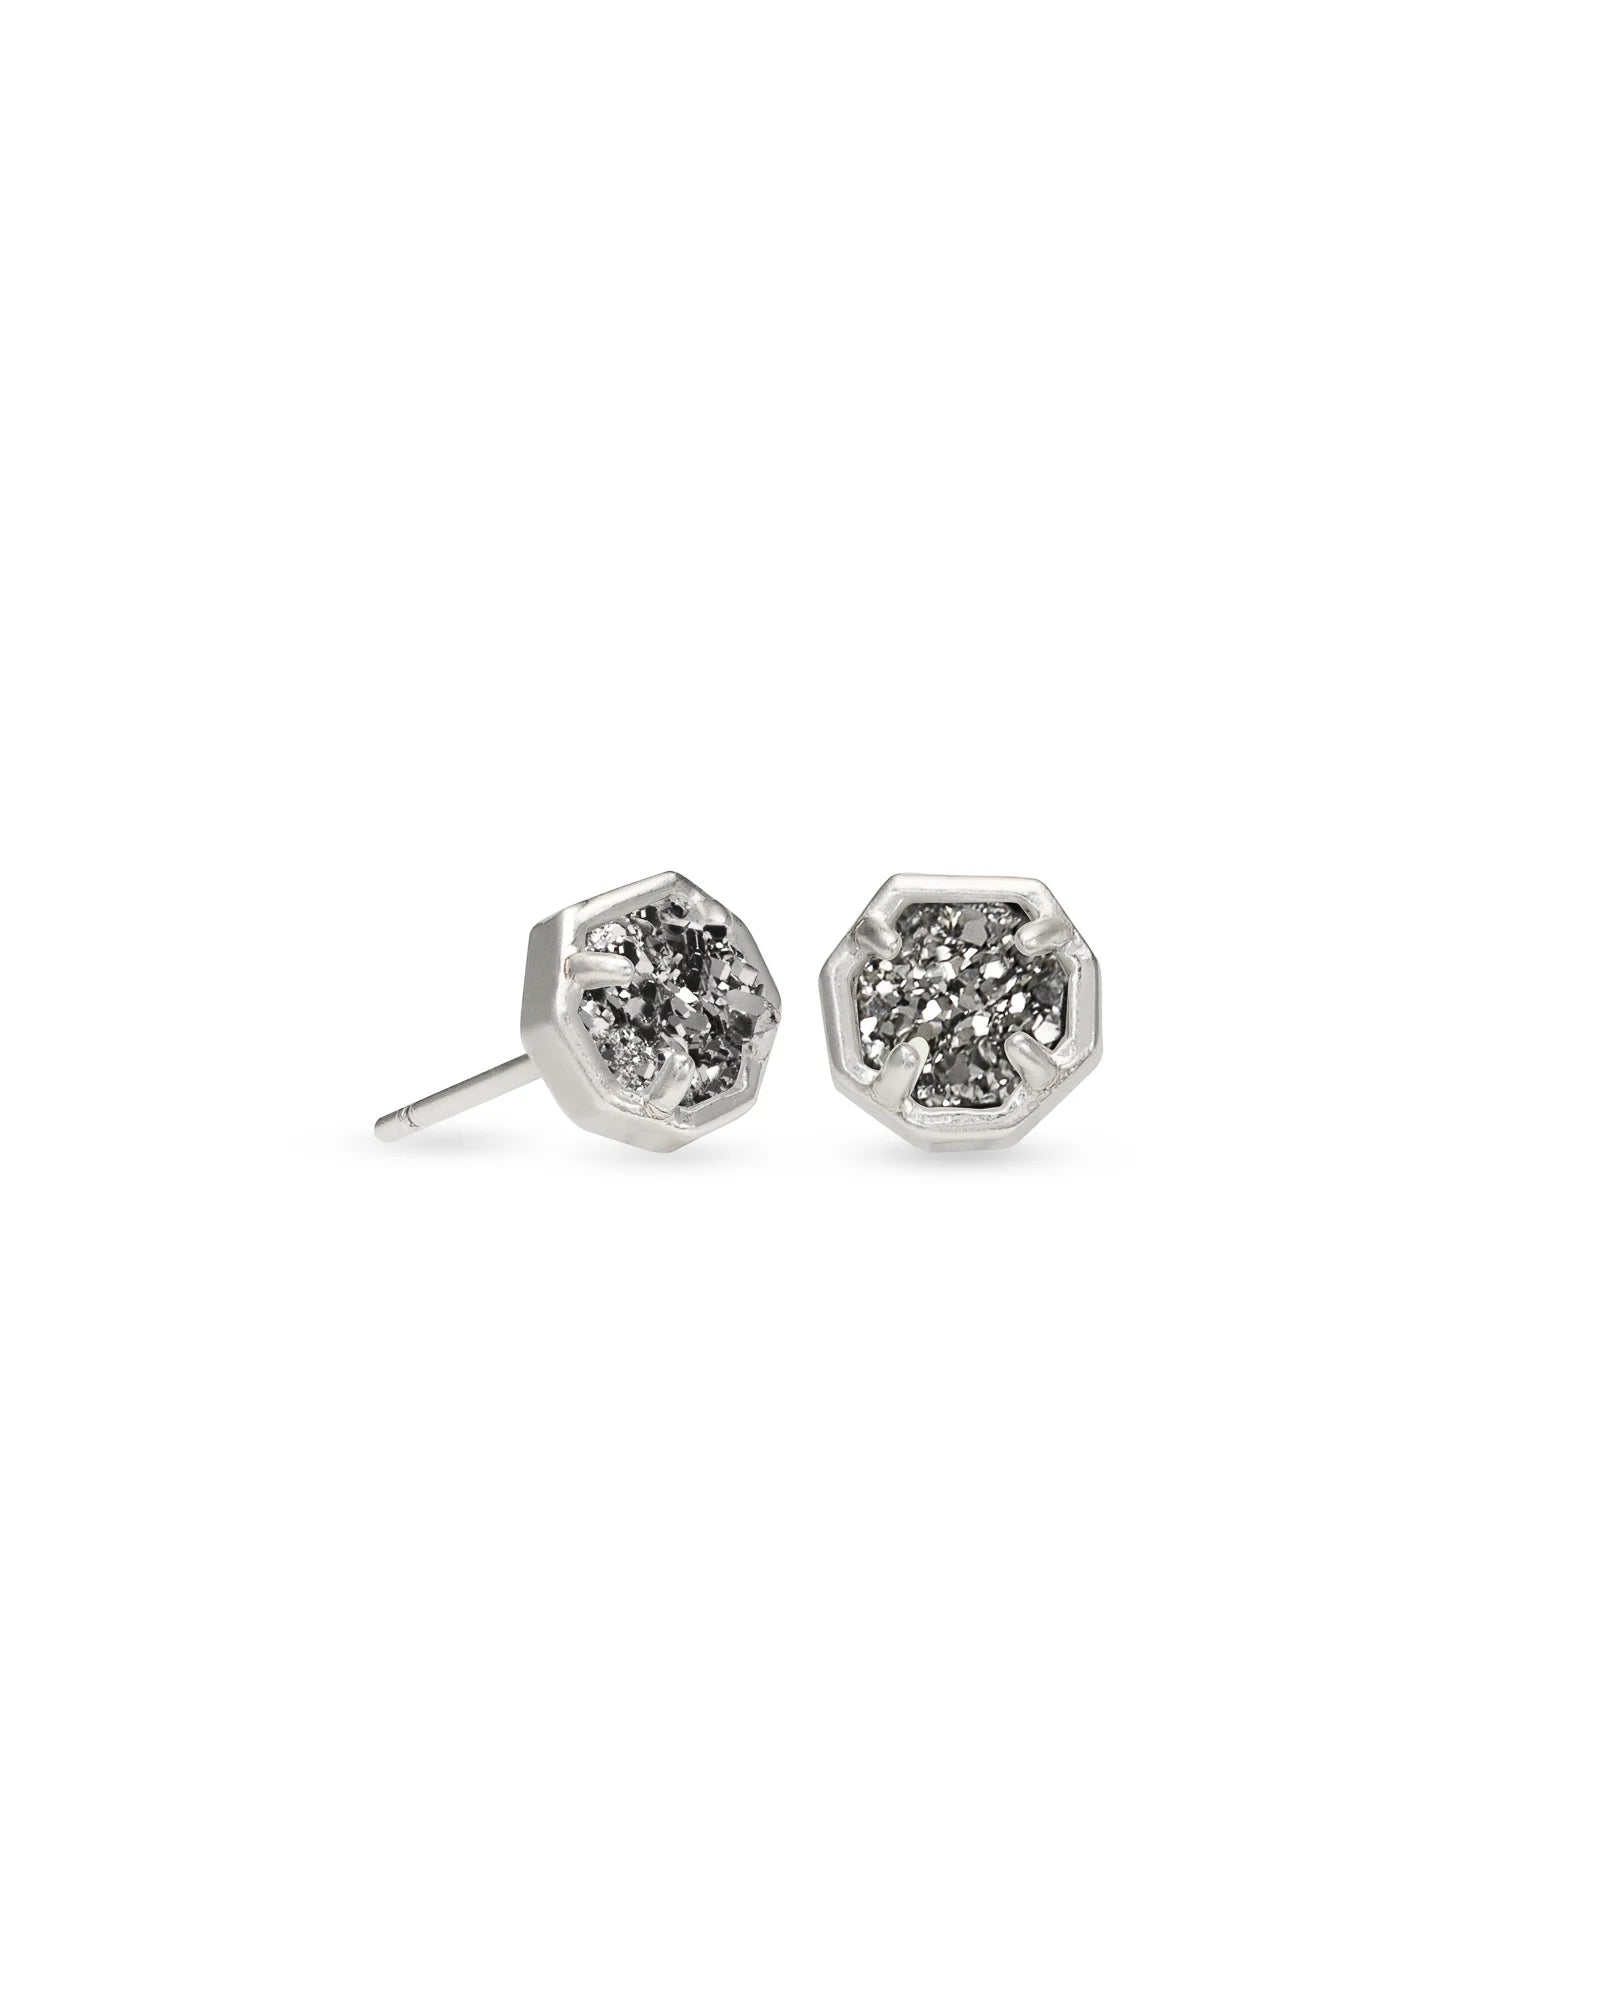 KENDRA SCOTT- Nola Silver Stud Earrings in Platinum Drusy